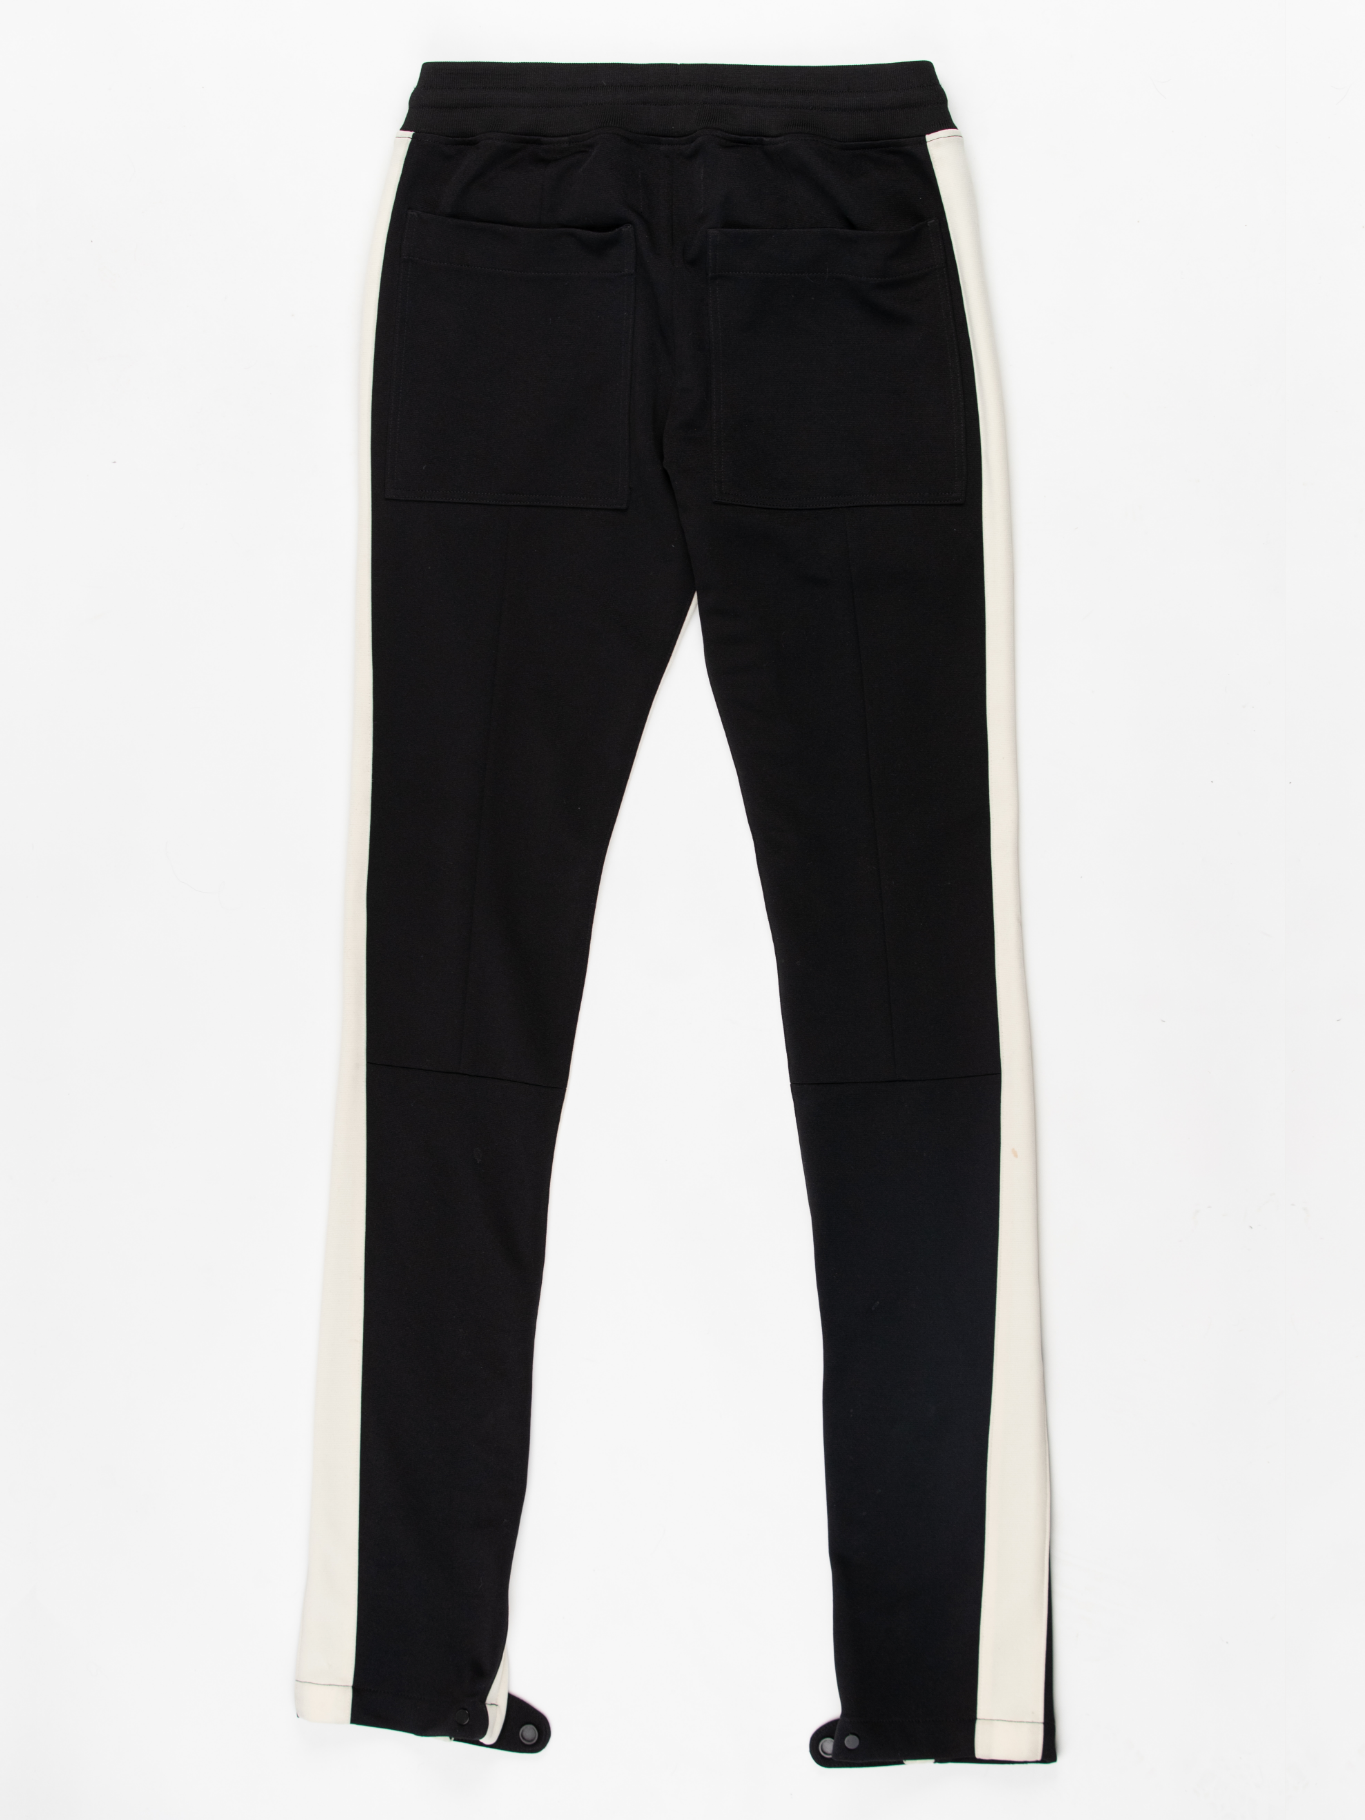 'Silk Black' Double Stripe Track Pants